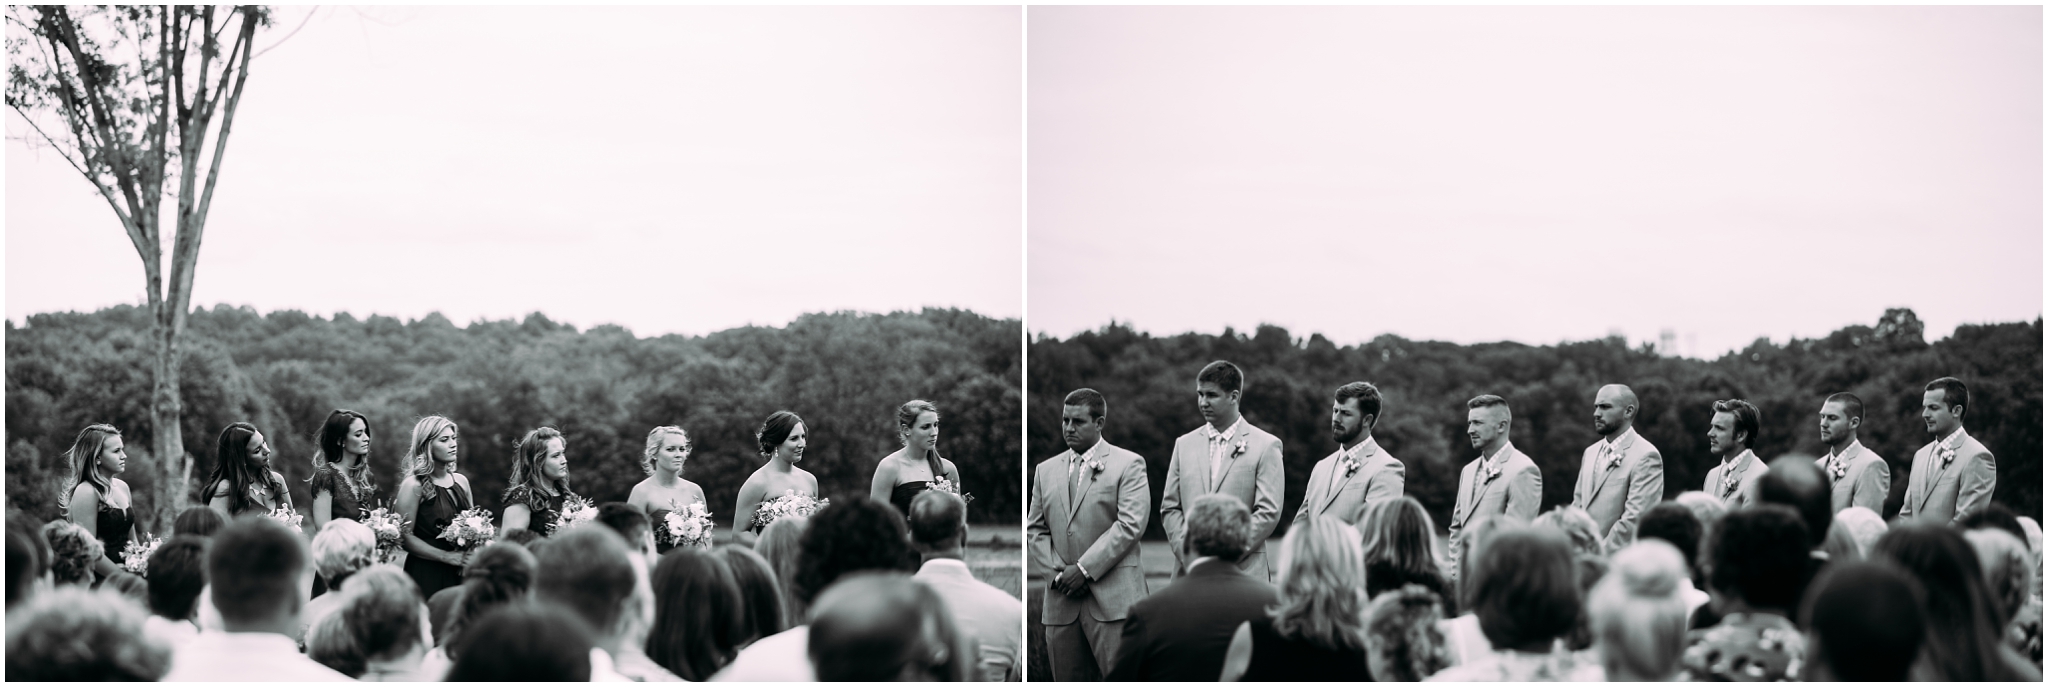 0719-171851-Edit-KatieandChris-Riverside on the Potomac Leesburg VA Wedding Photographer.jpg